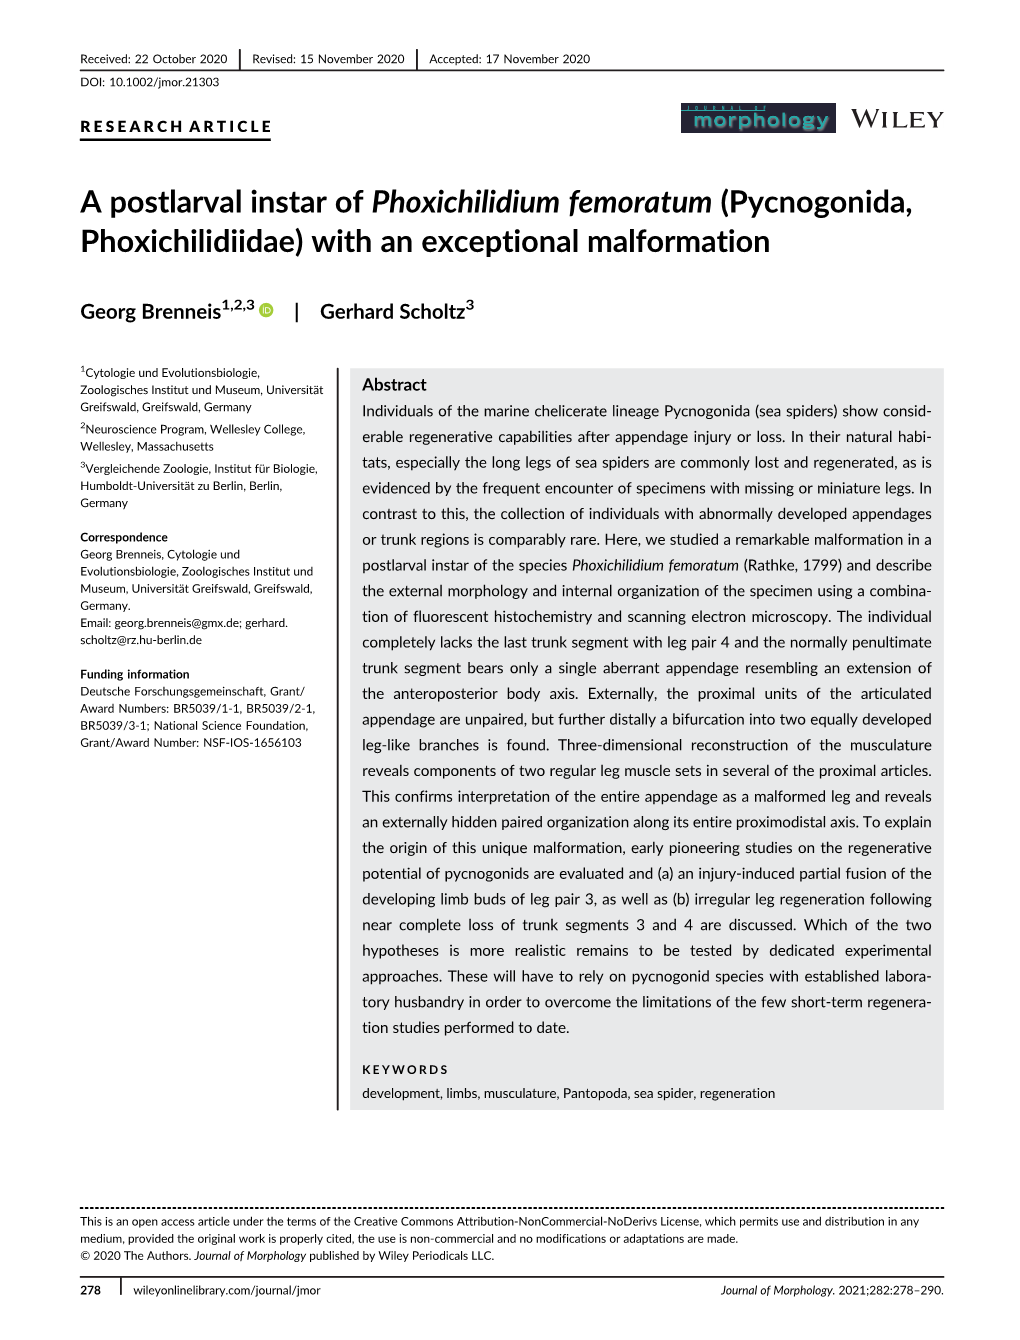 A Postlarval Instar of Phoxichilidium Femoratum (Pycnogonida, Phoxichilidiidae) with an Exceptional Malformation